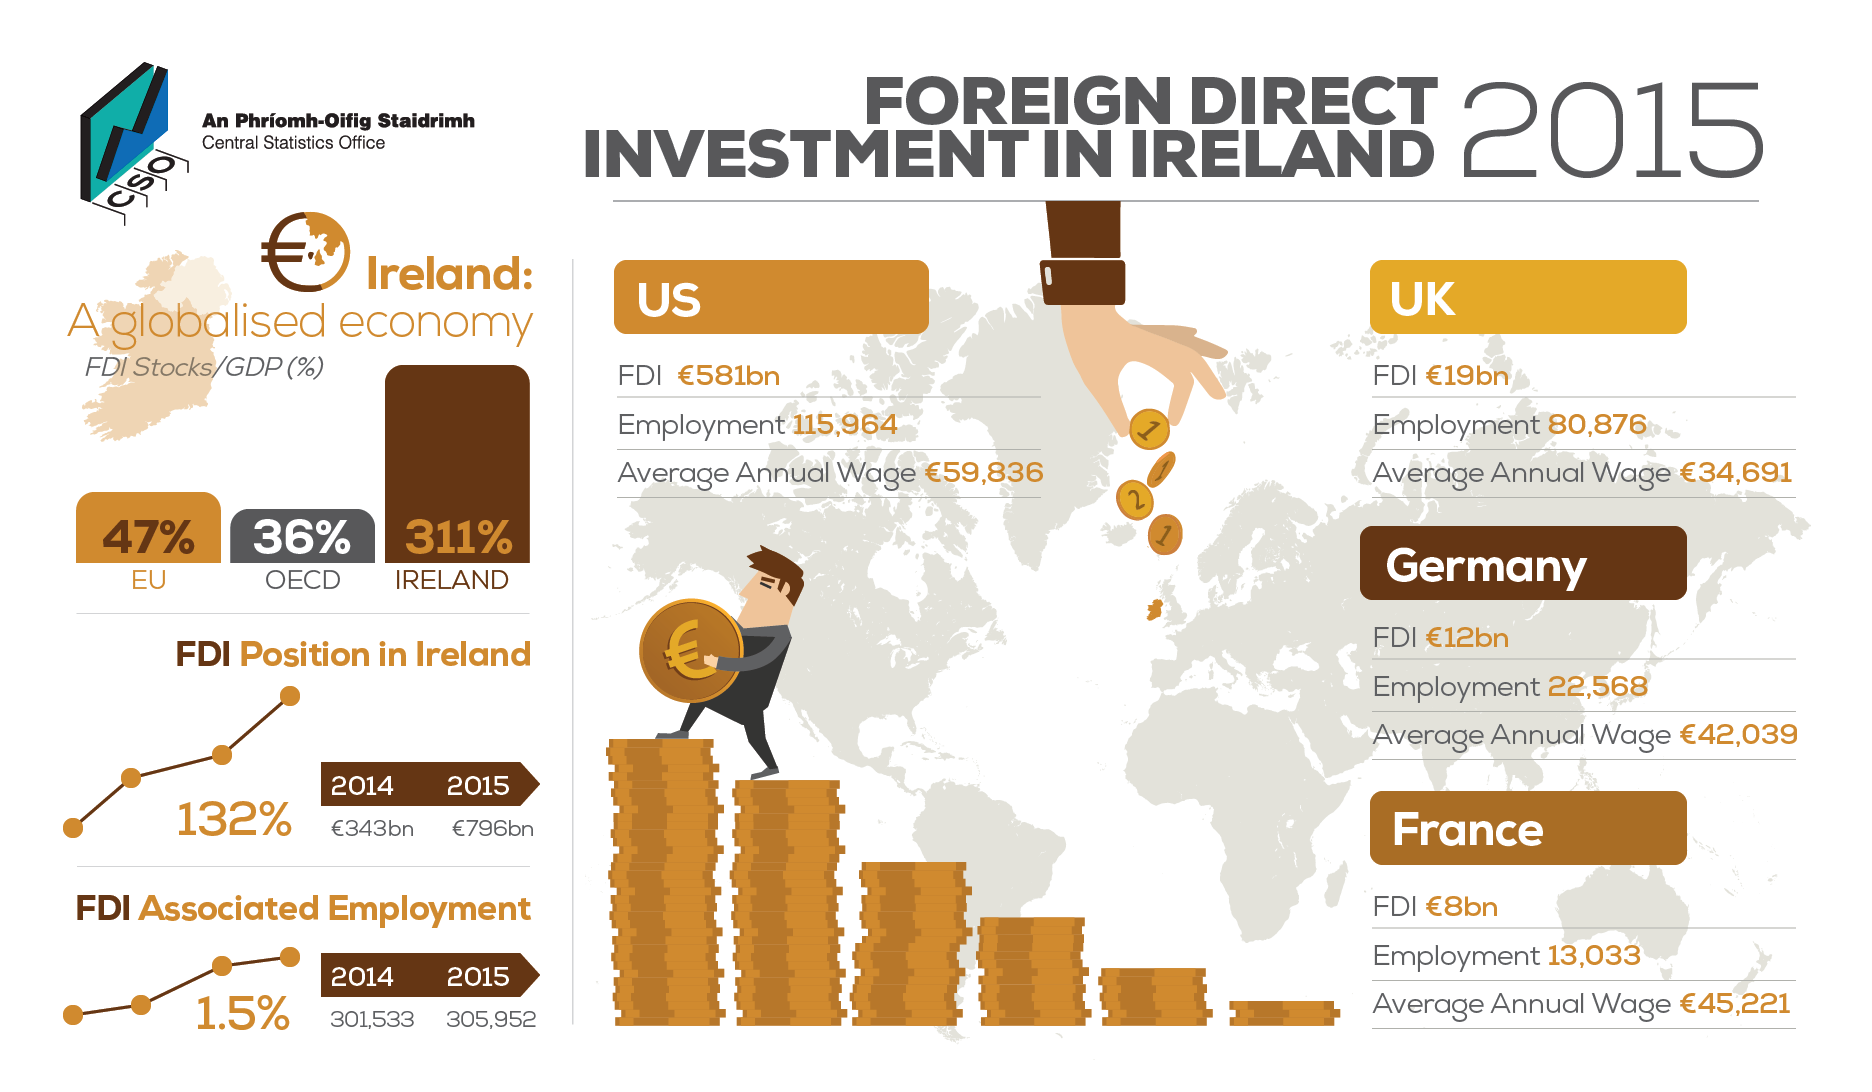 P-FDI2015 Infographic image